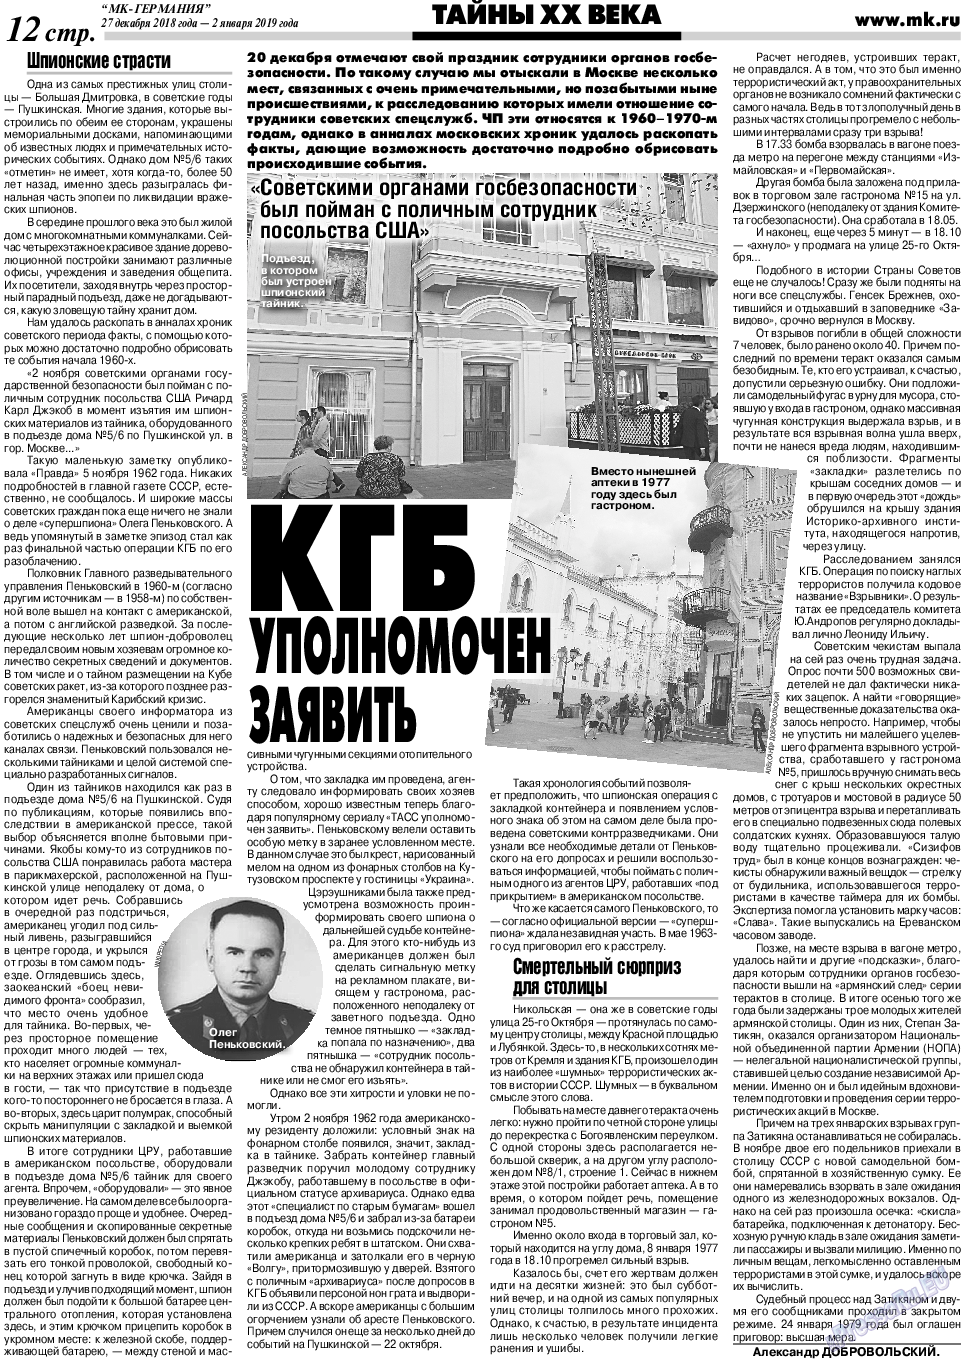 МК-Германия, газета. 2019 №1 стр.12